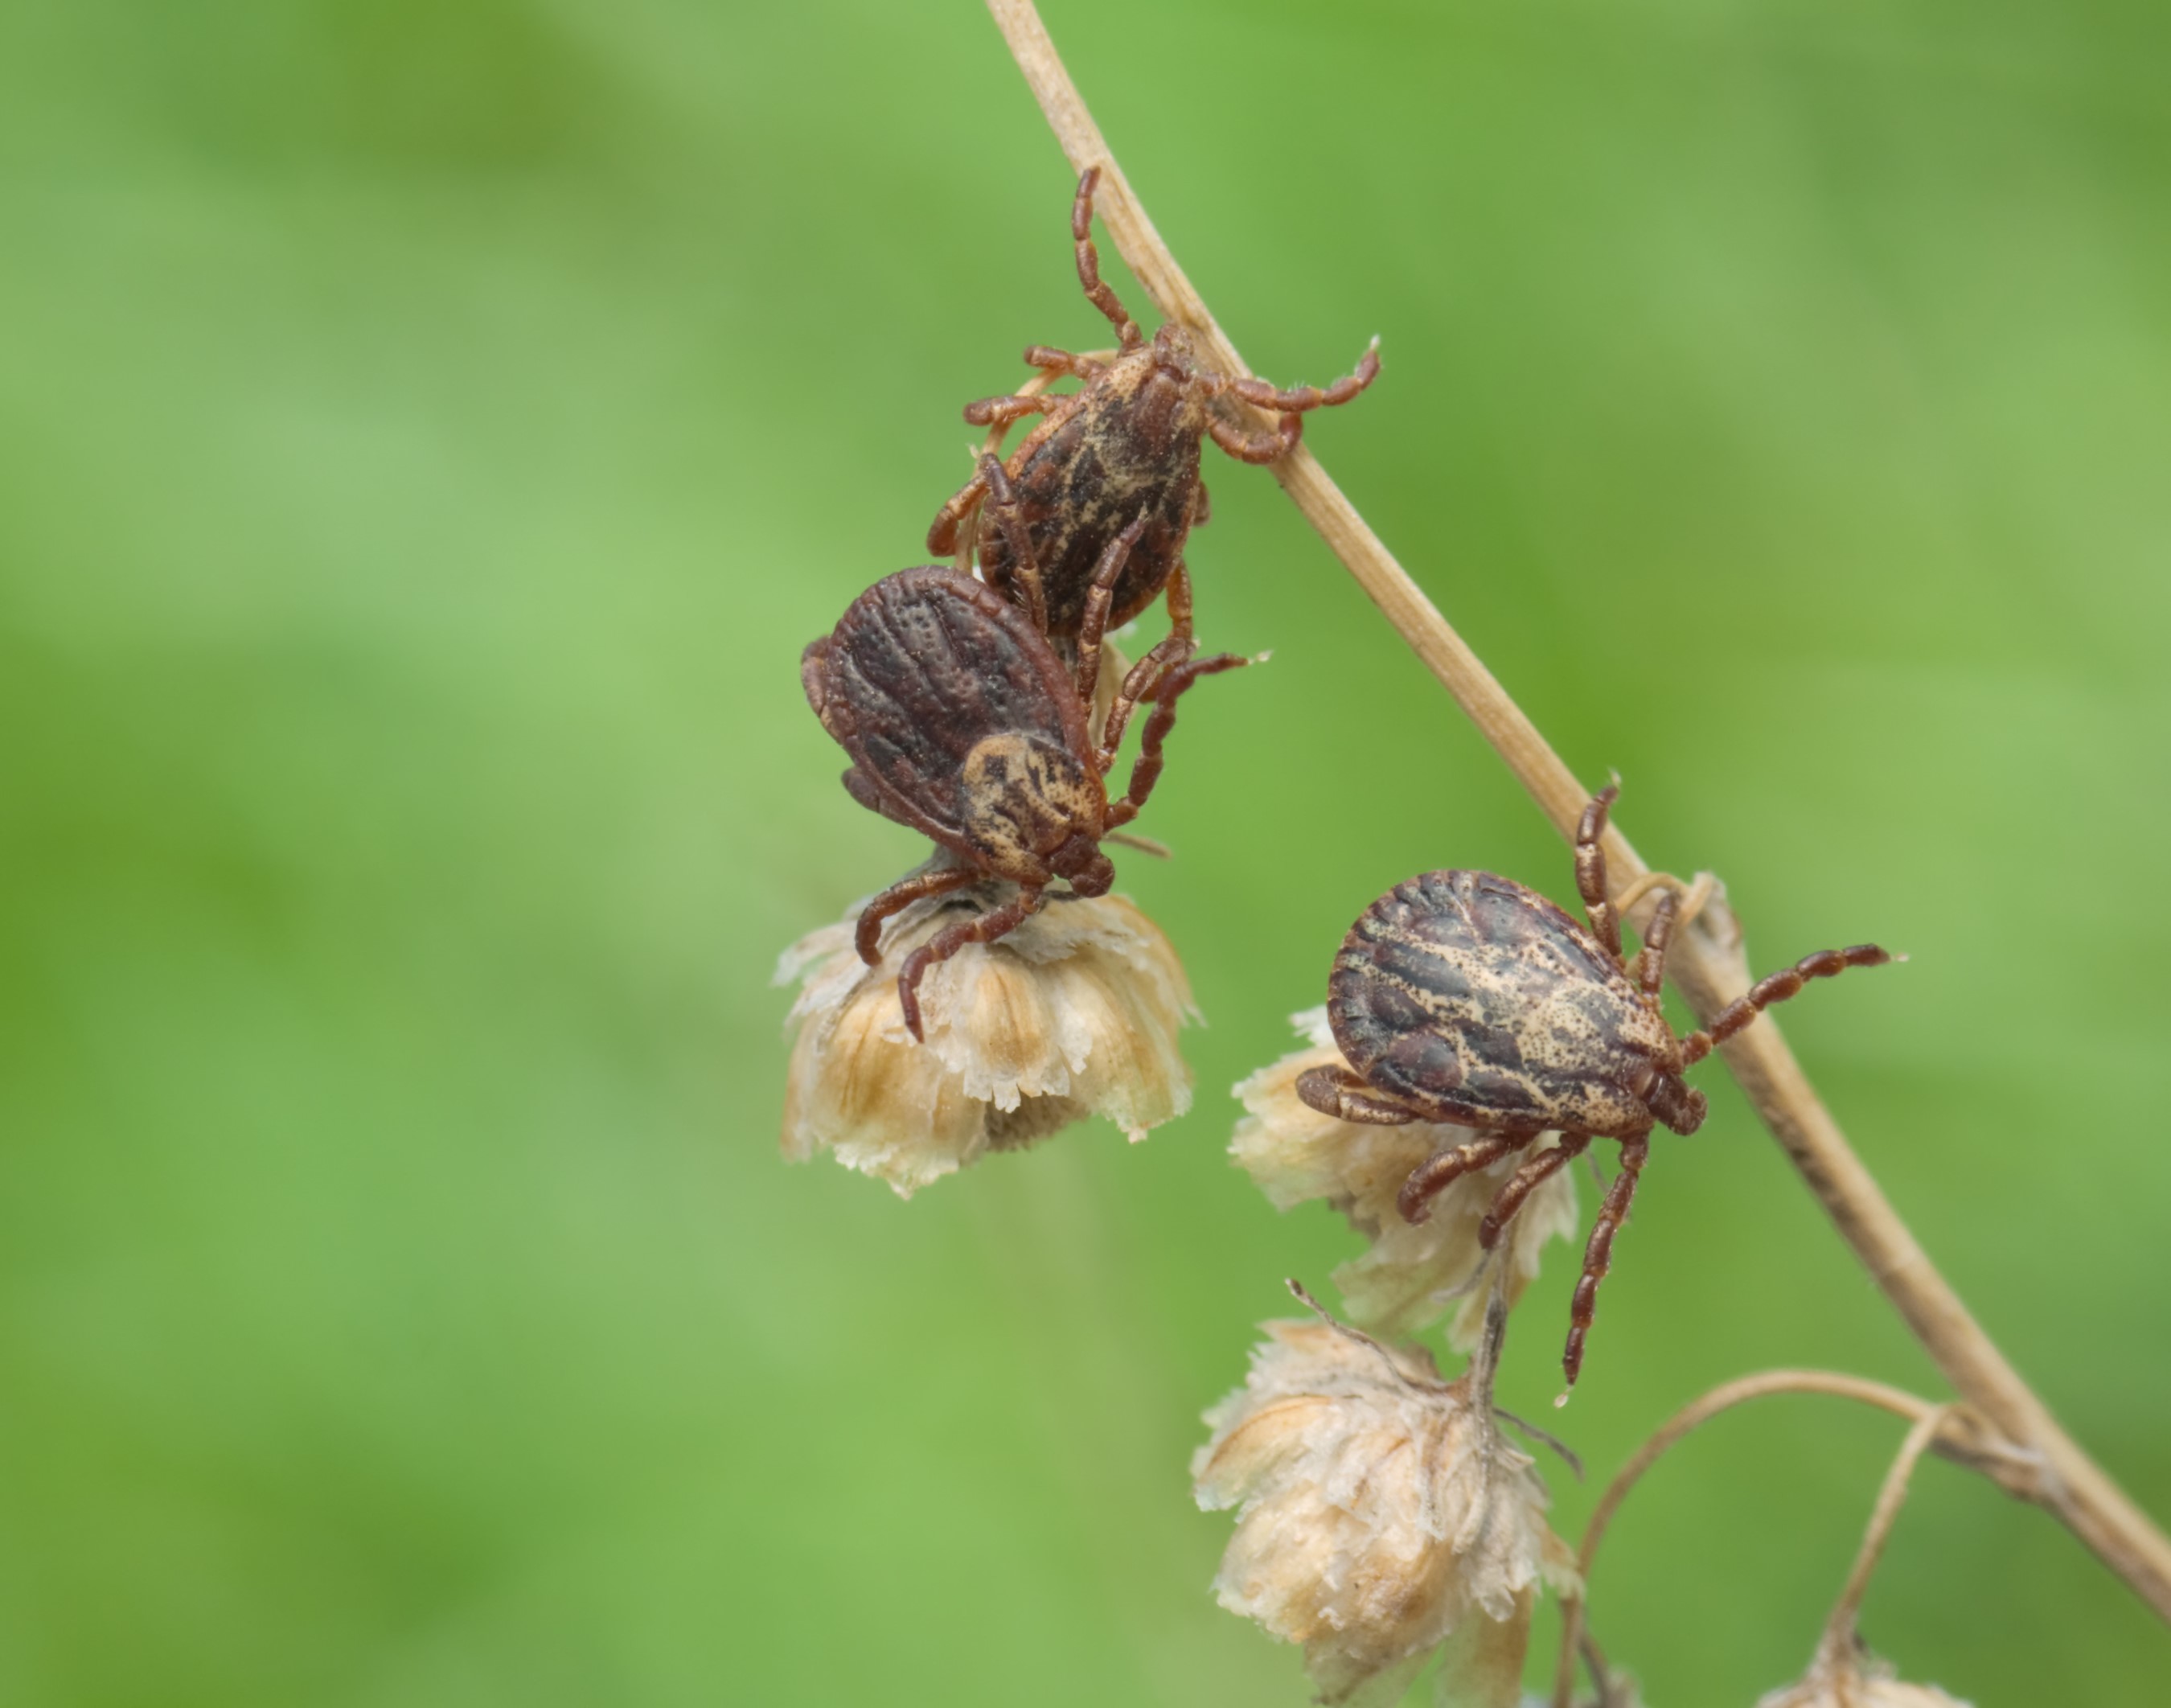 Three Dermacentor ticks on a plant